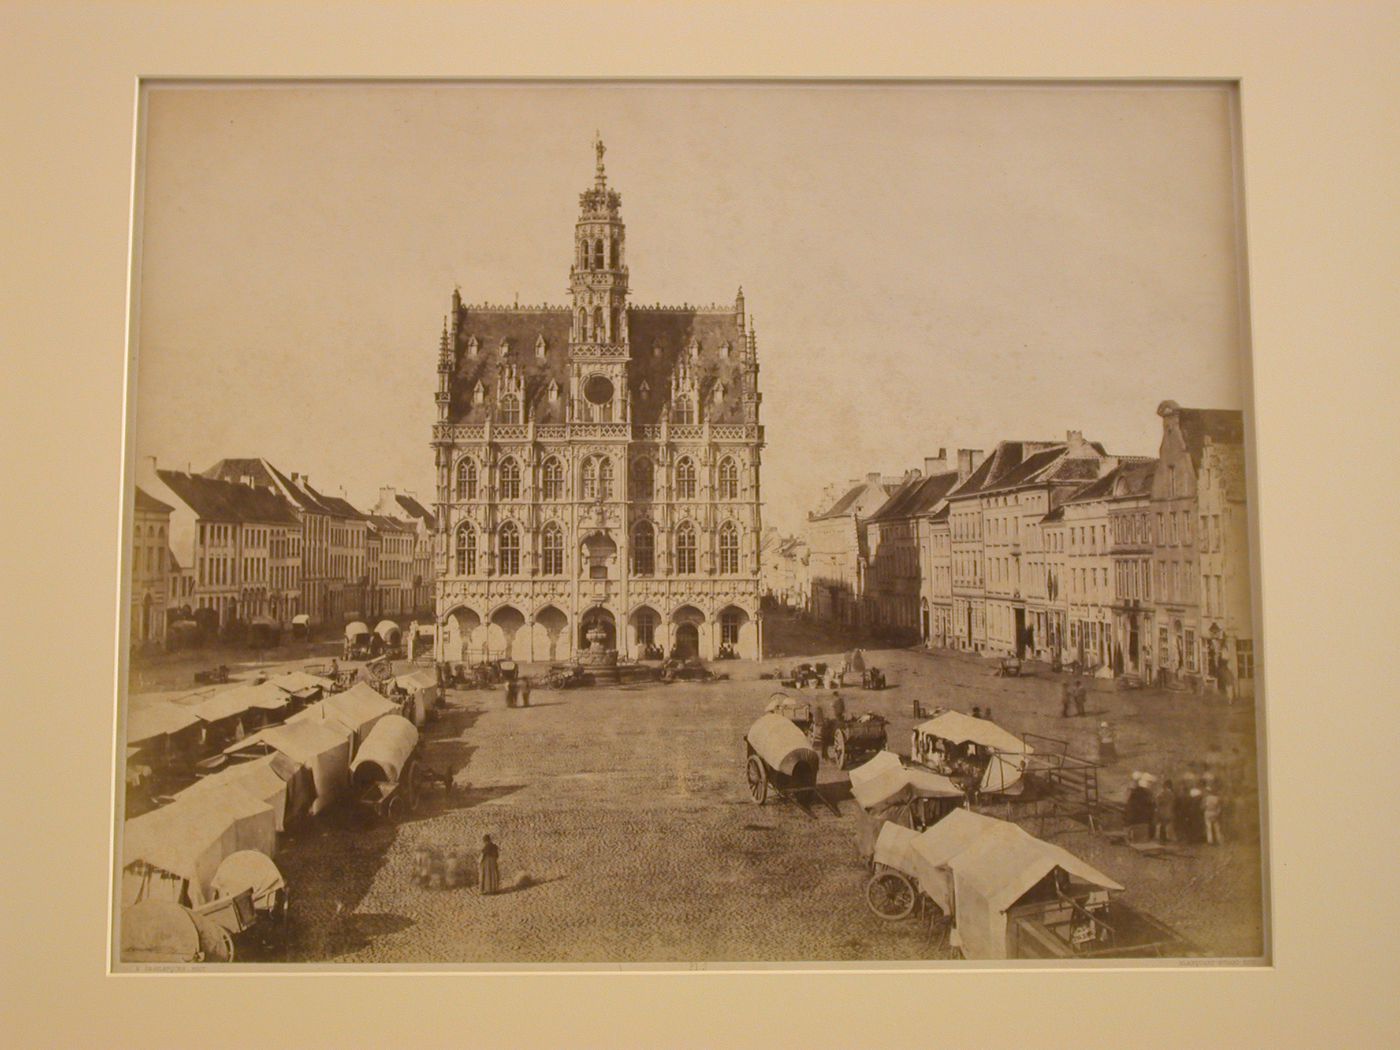 View of Grande place, with market stalls, Audenarde, Belgium